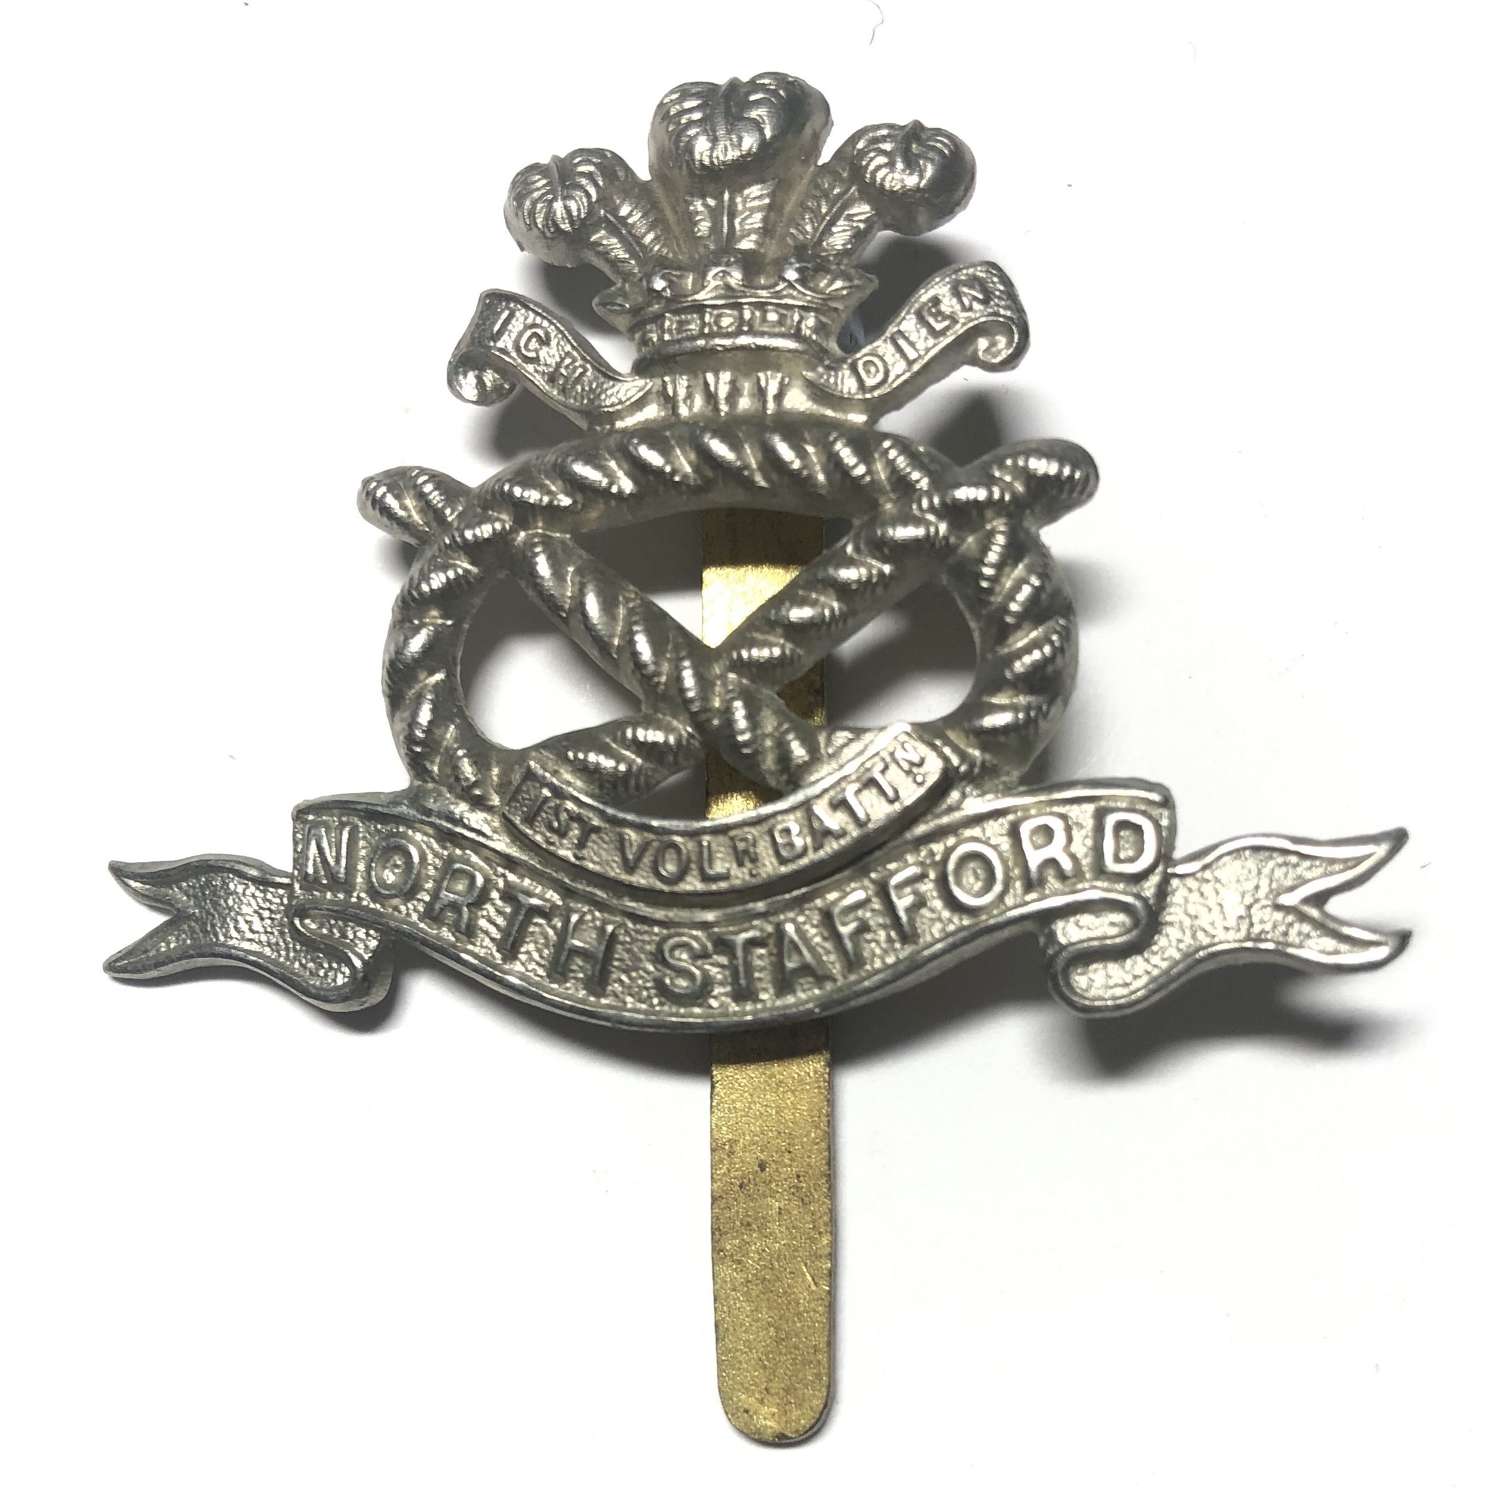 1st Stoke on Trent VB North Staffordshire Regiment pre1908 cap badge